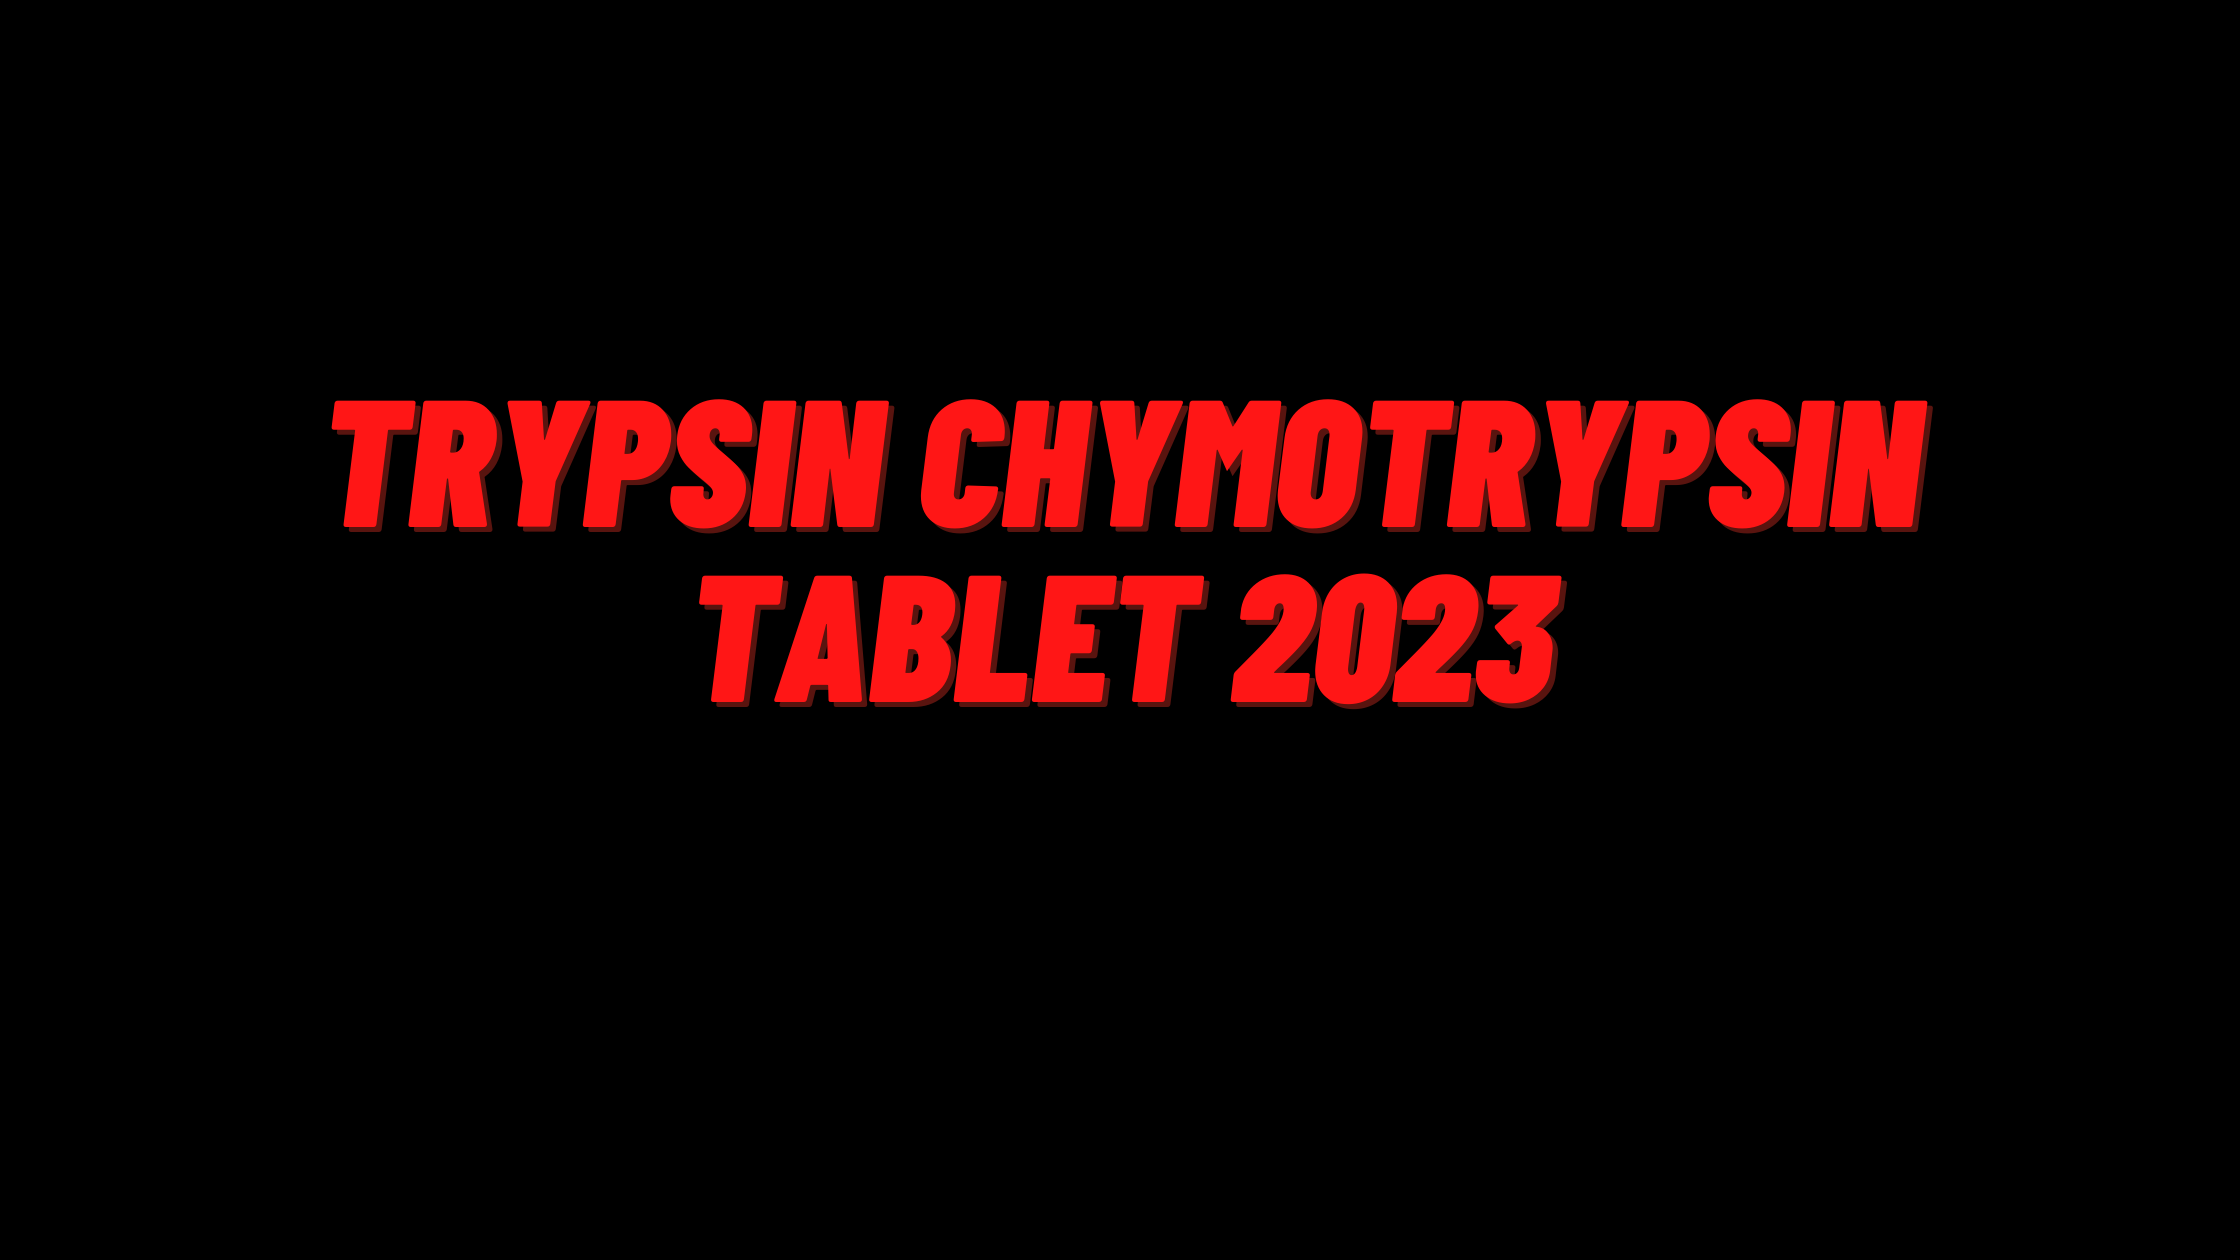 Trypsin Chymotrypsin Tablet Uses & Side Effects 2023